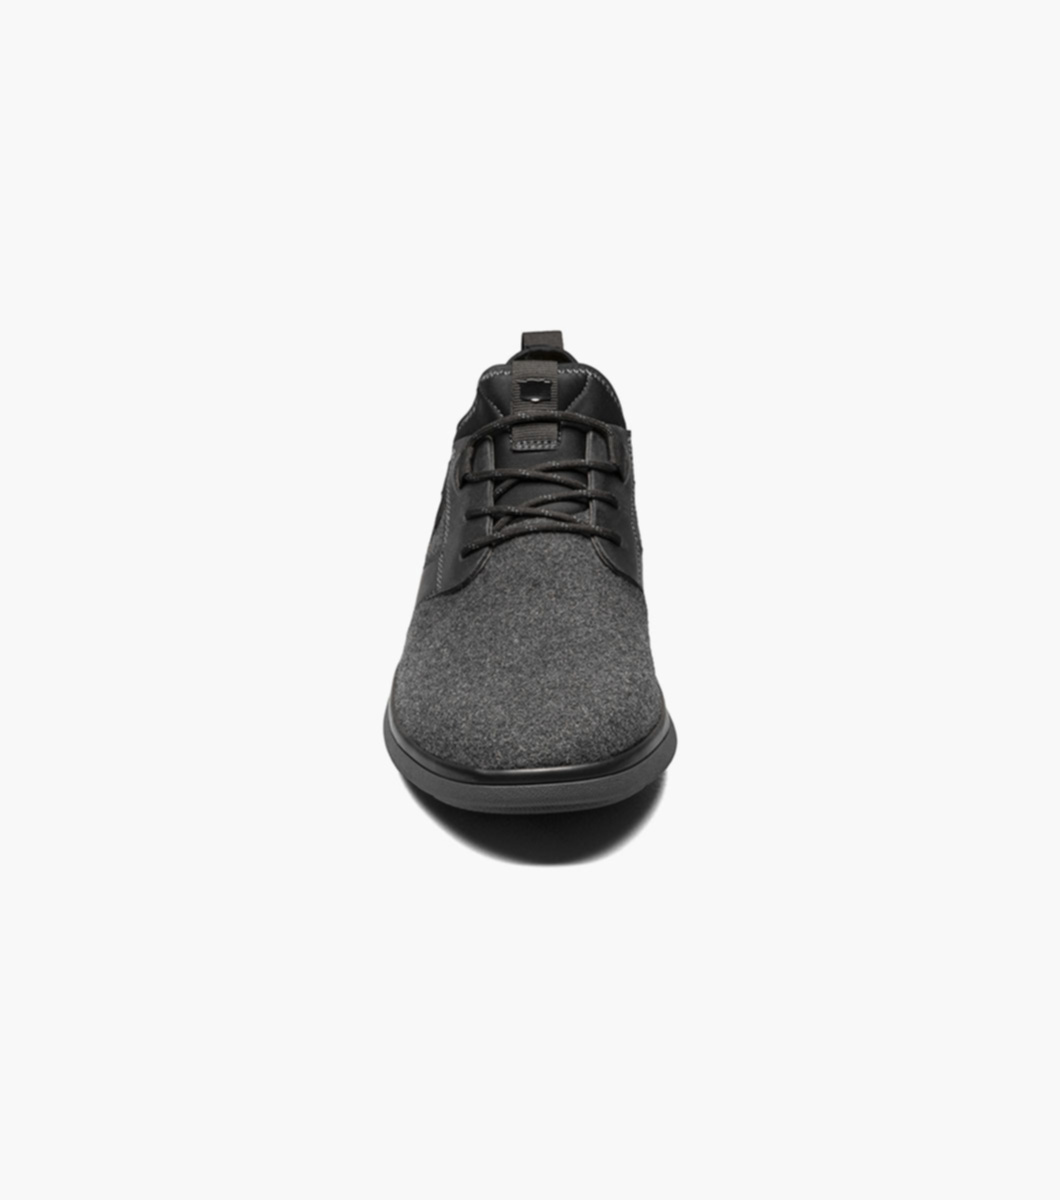 Venture Wool Plain Toe Lace Up Sneaker Men's Casual Shoes 